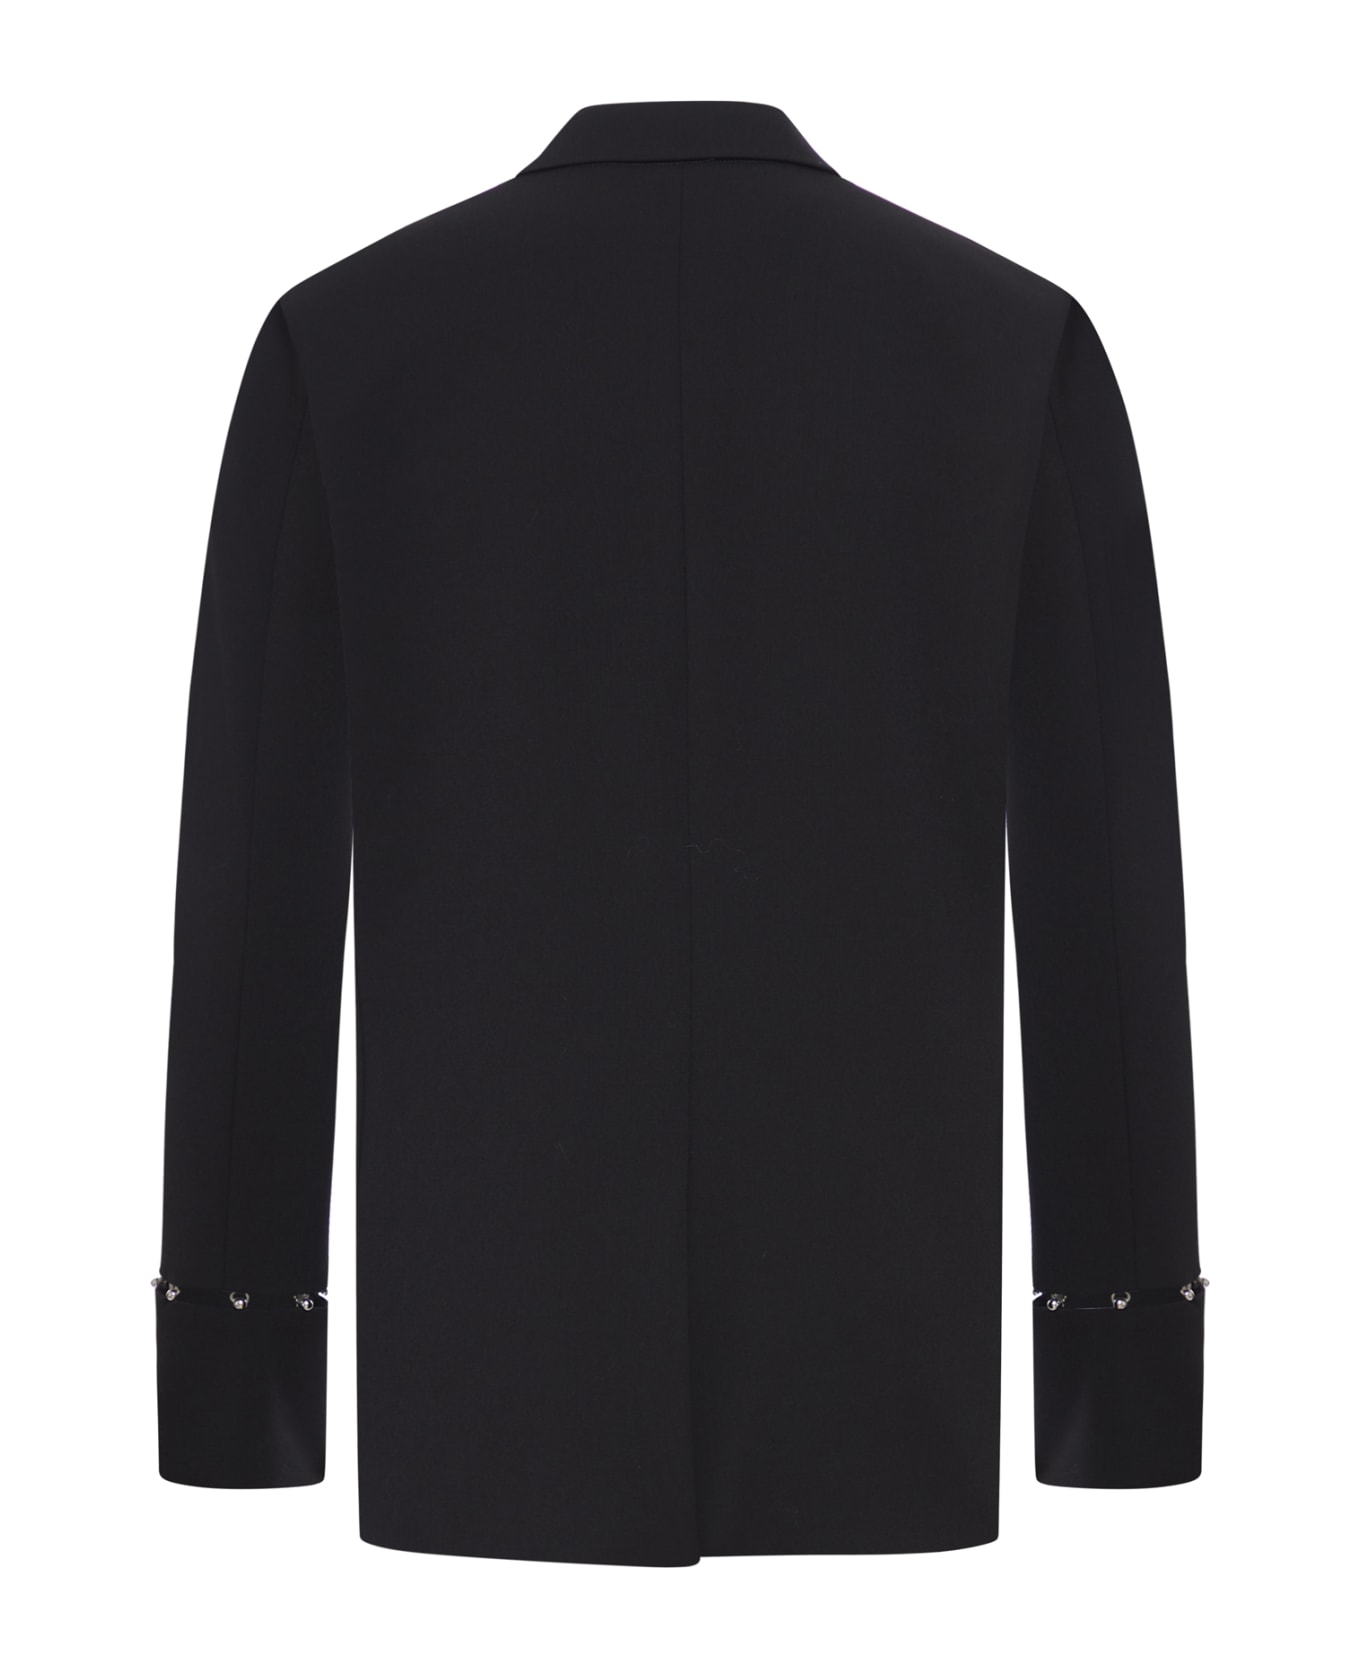 Del Core Single Breasted Tailored Jacket With Mushroom Hook Detail On Sleeves - Black